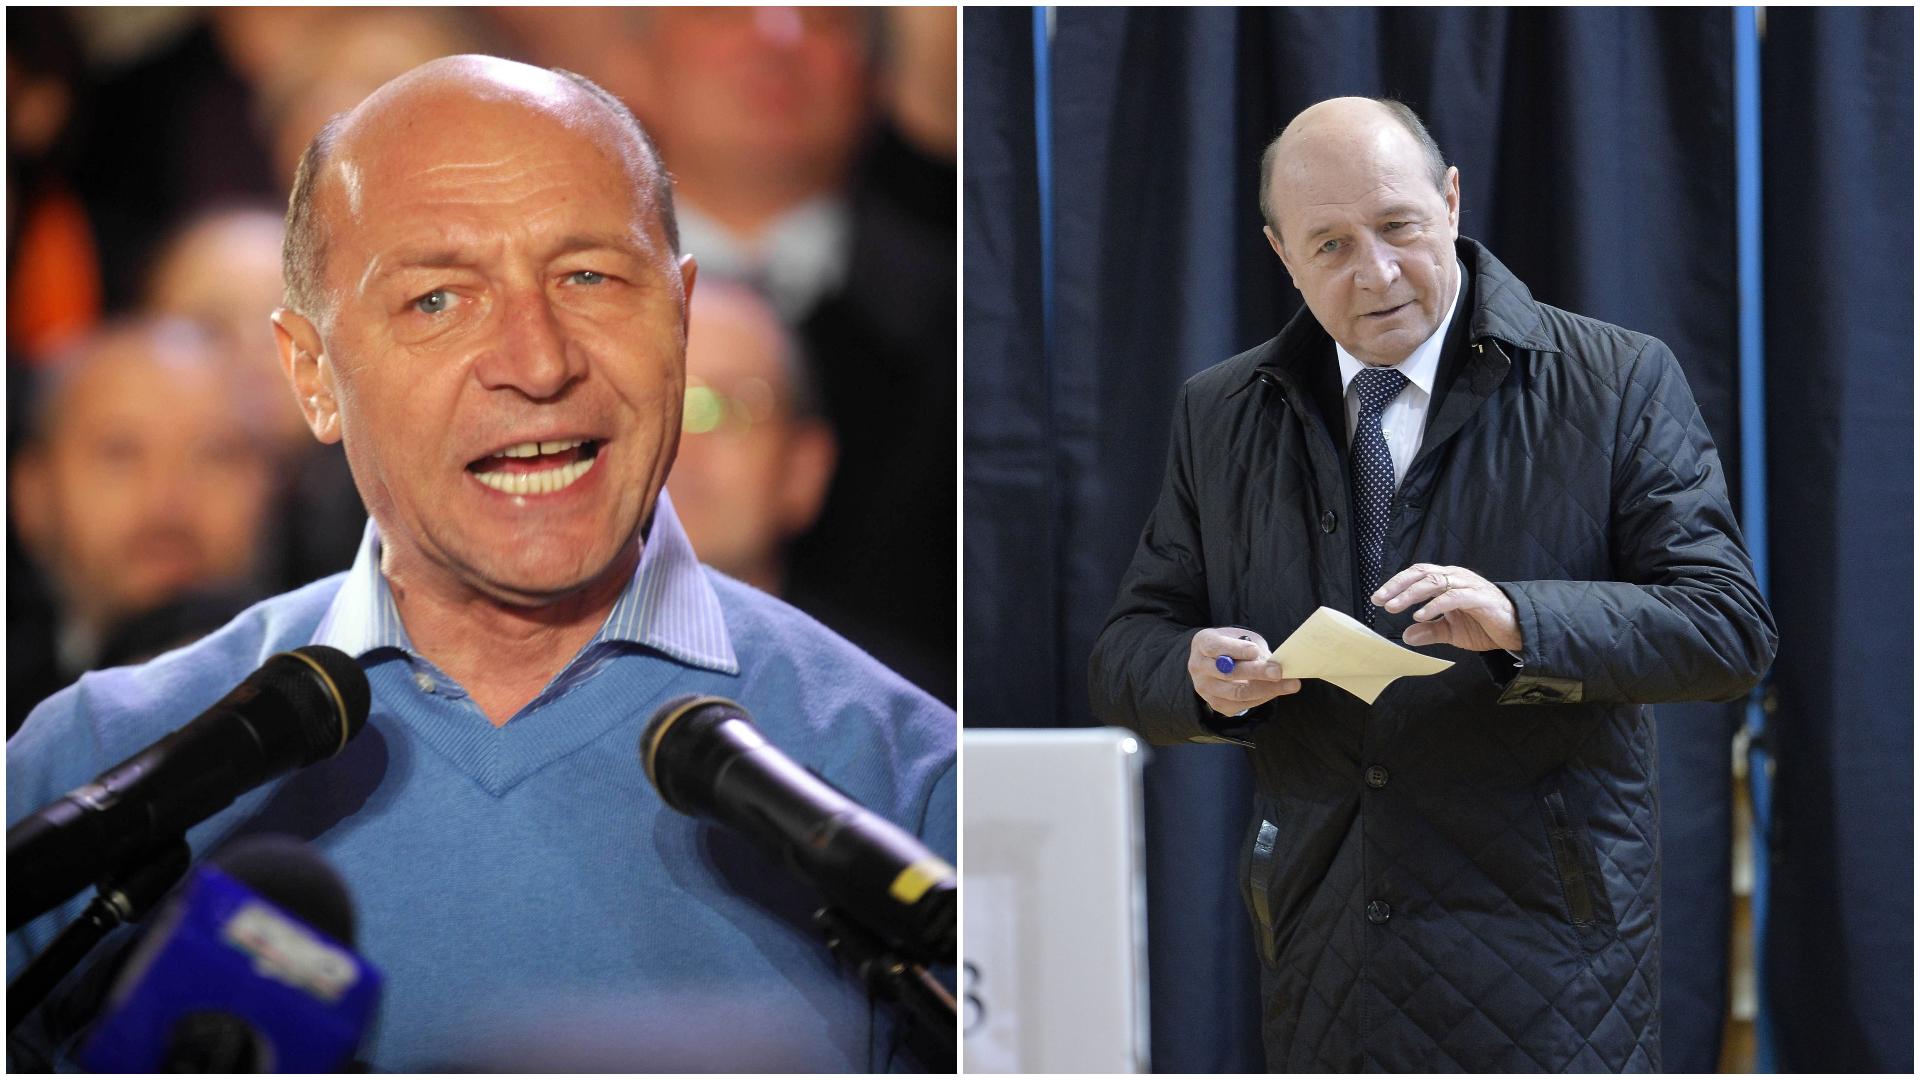 Colaj cu Traian Băsescu